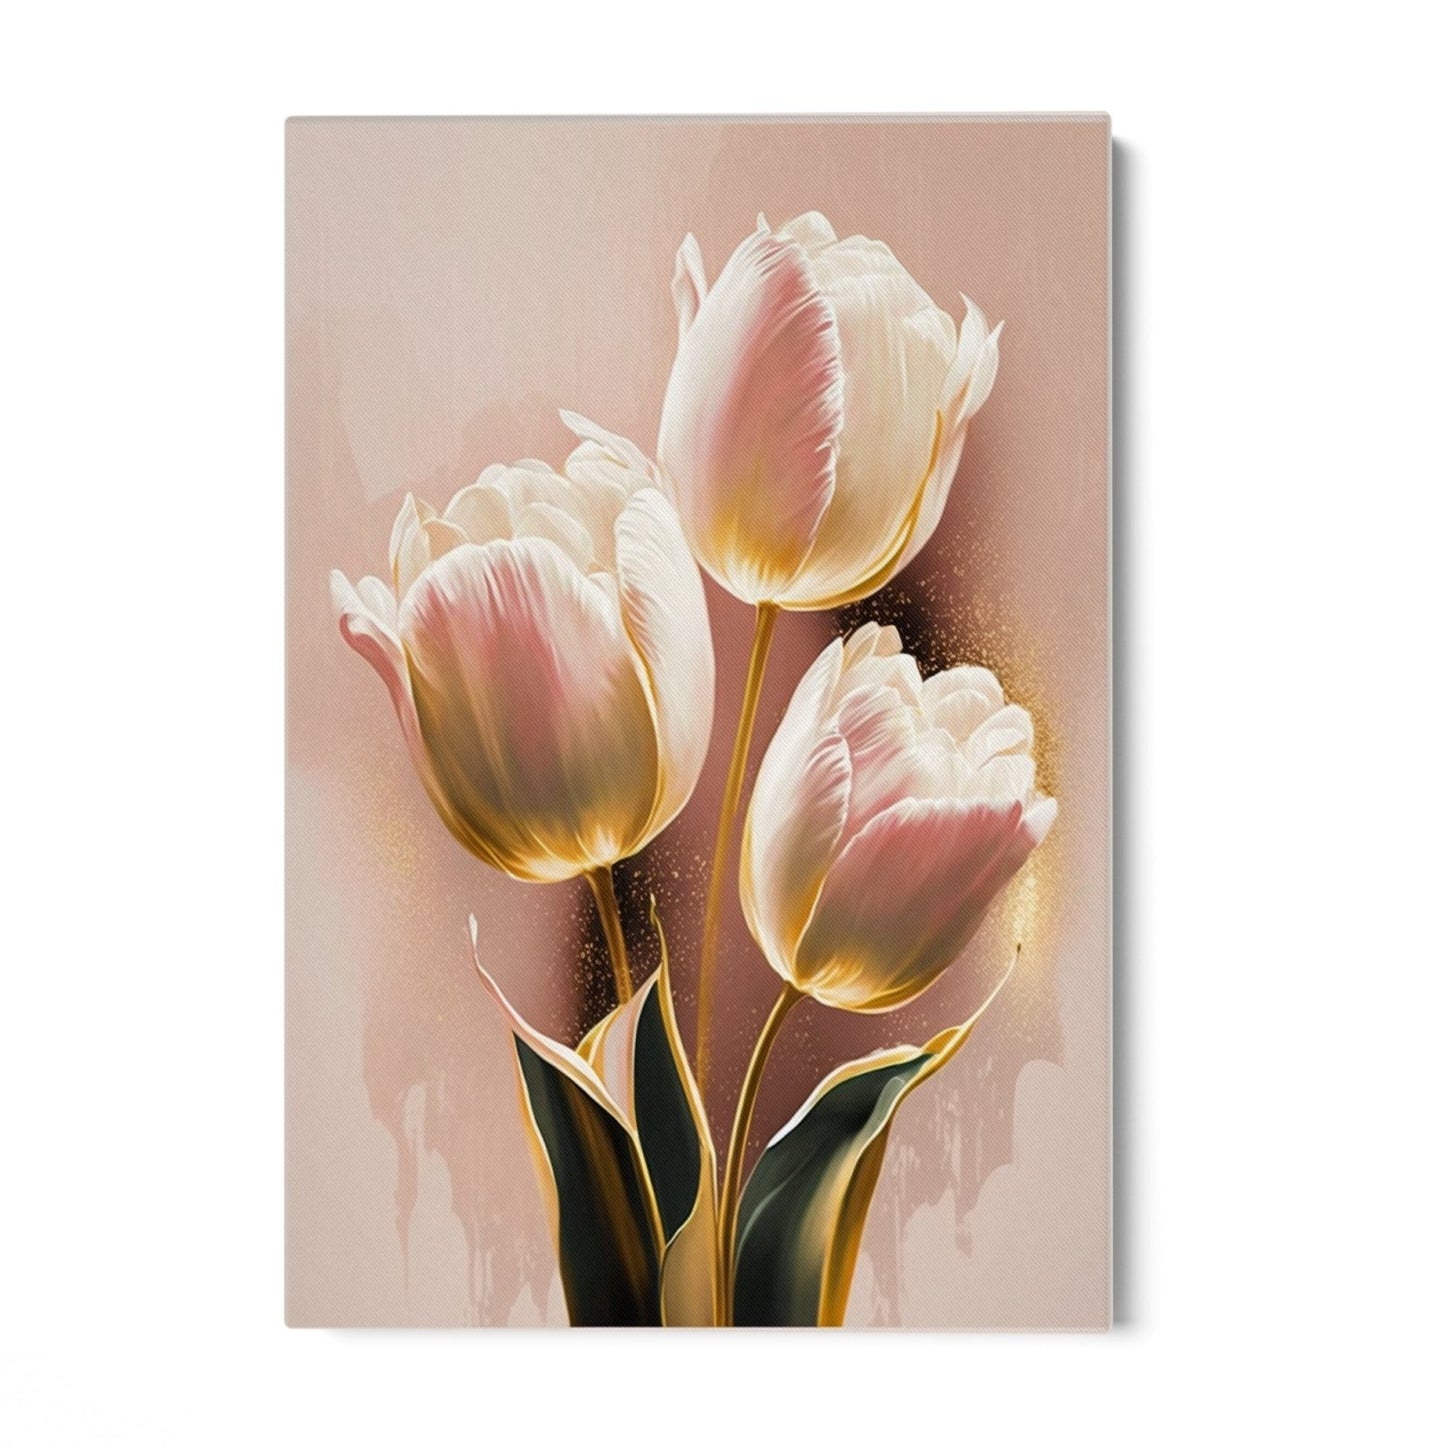 Delikatny tulipan